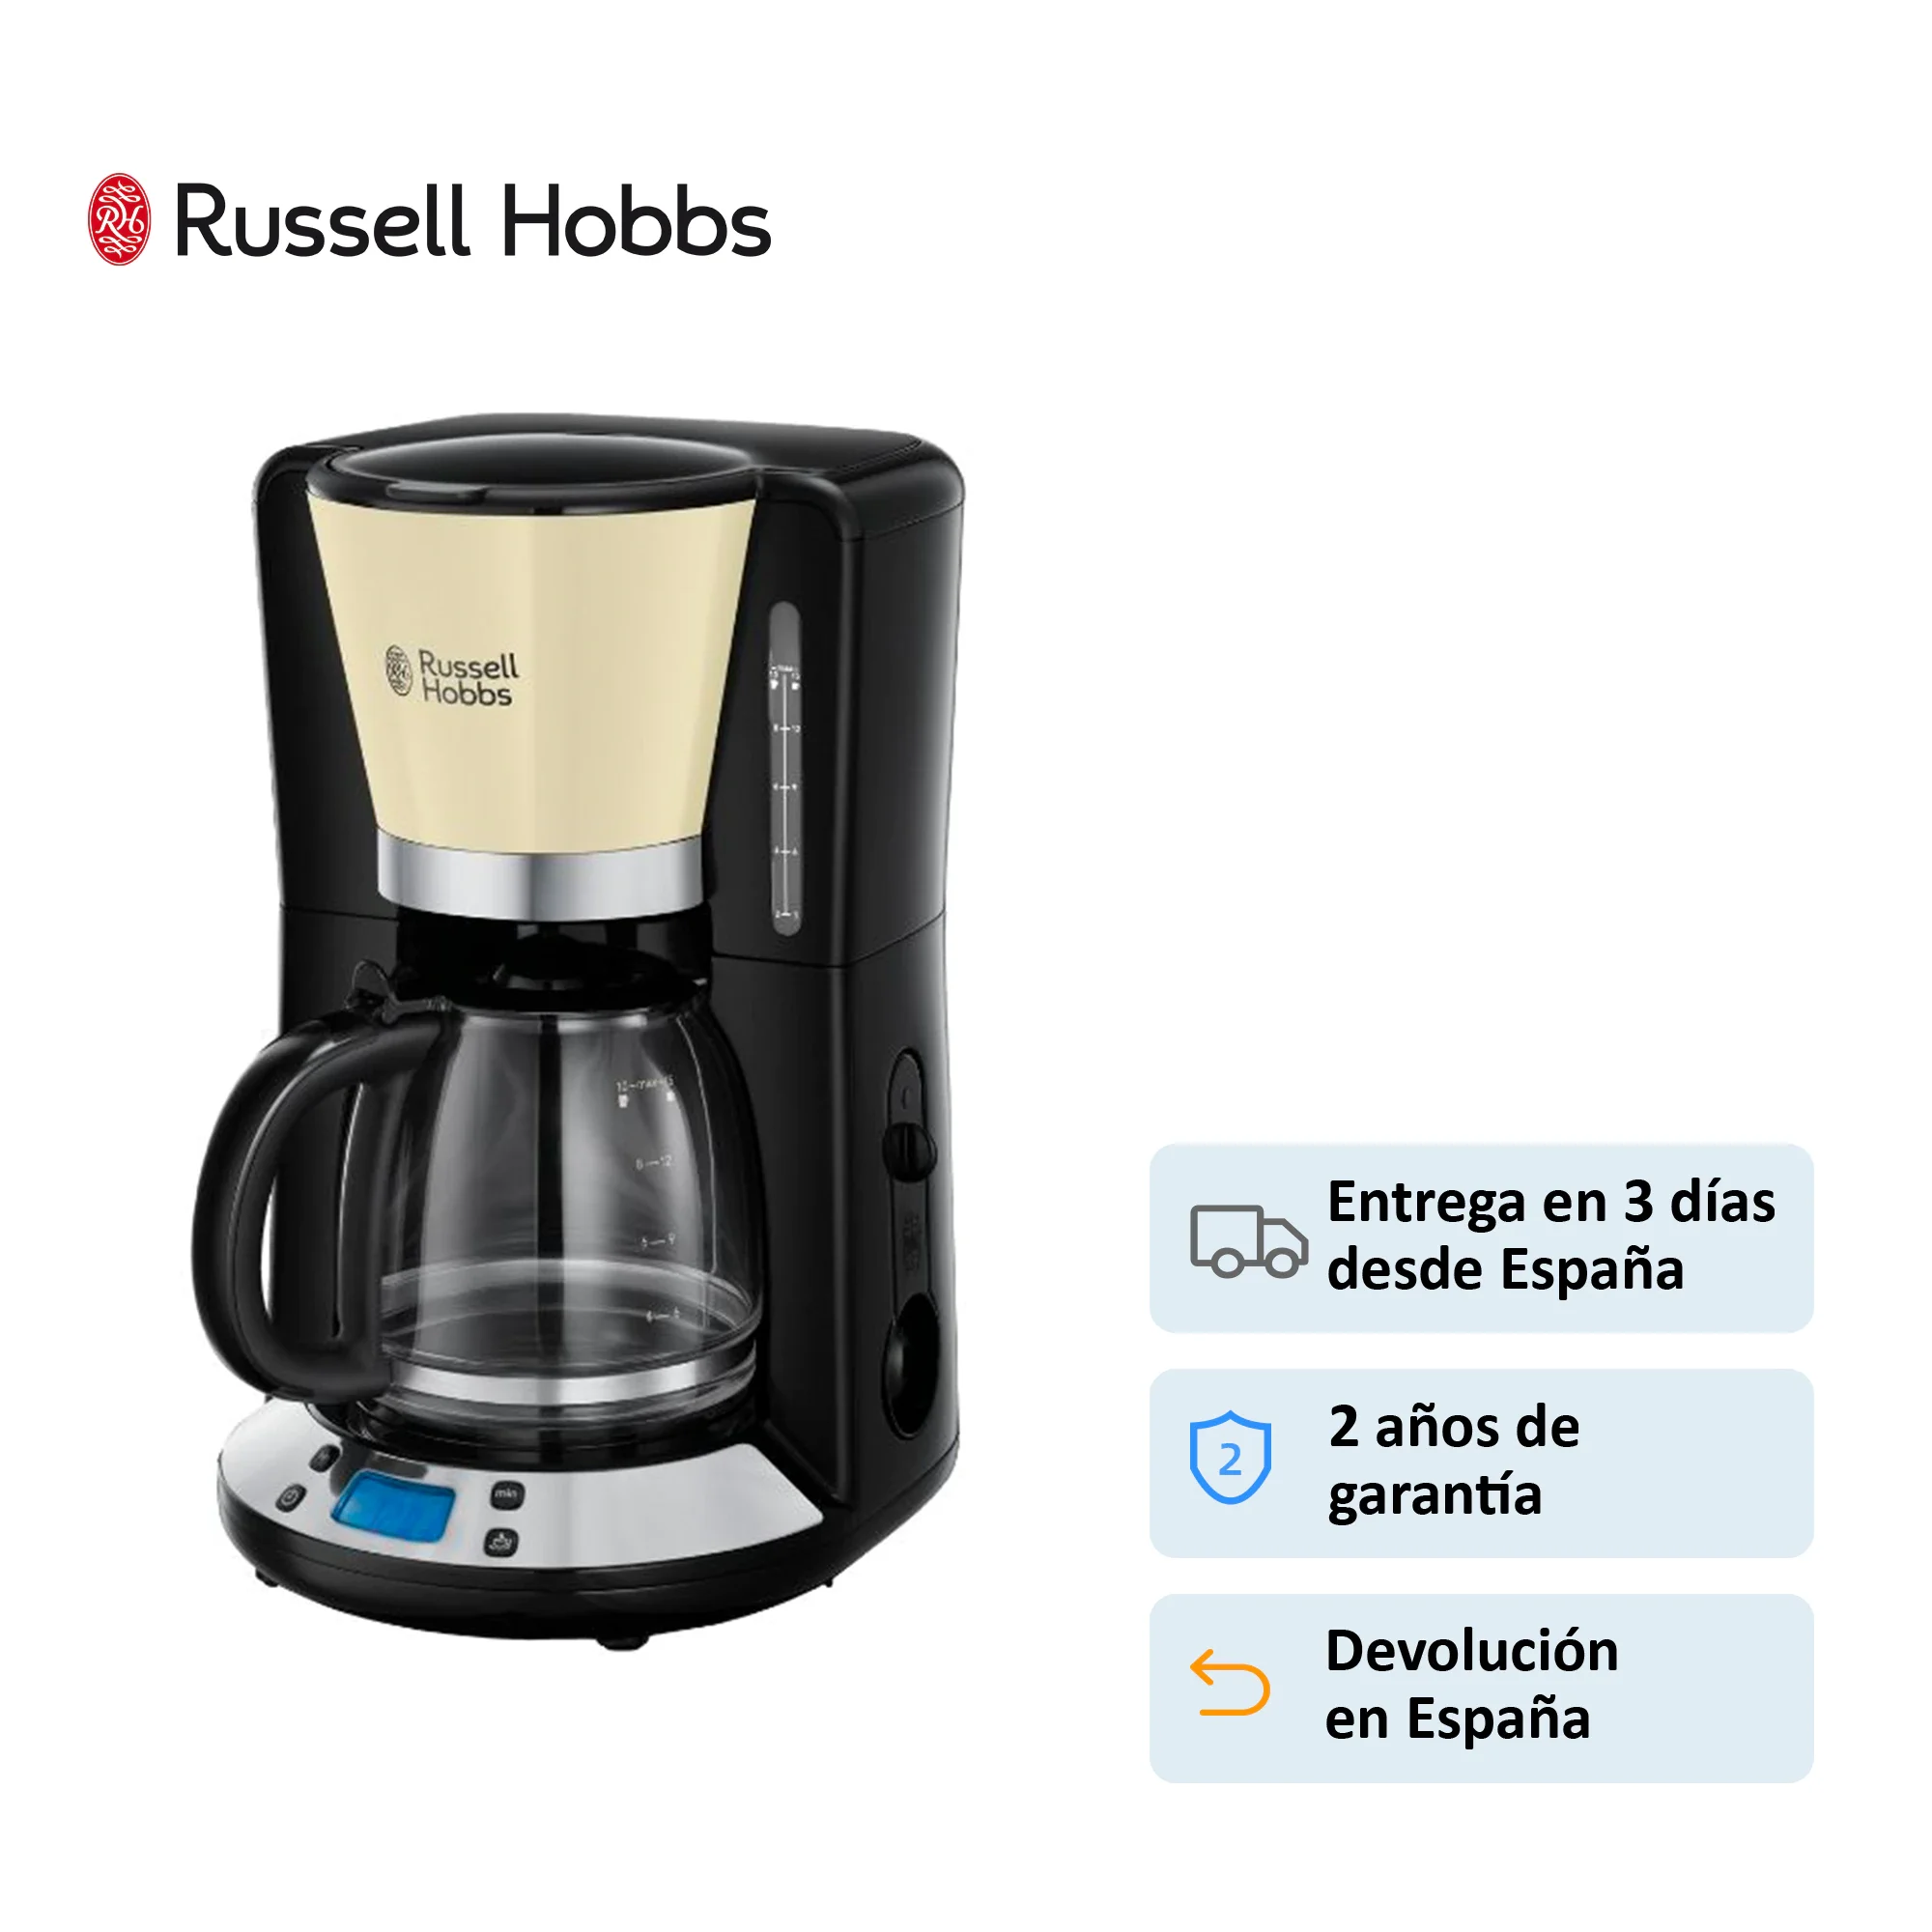 https://ae01.alicdn.com/kf/U8d654d3134a246ec8d8f62b652e59bdaX/Russell-Hobbs-Colors-Plus-Cream-Drip-Coffee-Maker-1-25l-Glass-Jug-Brews-up-to-15.jpg